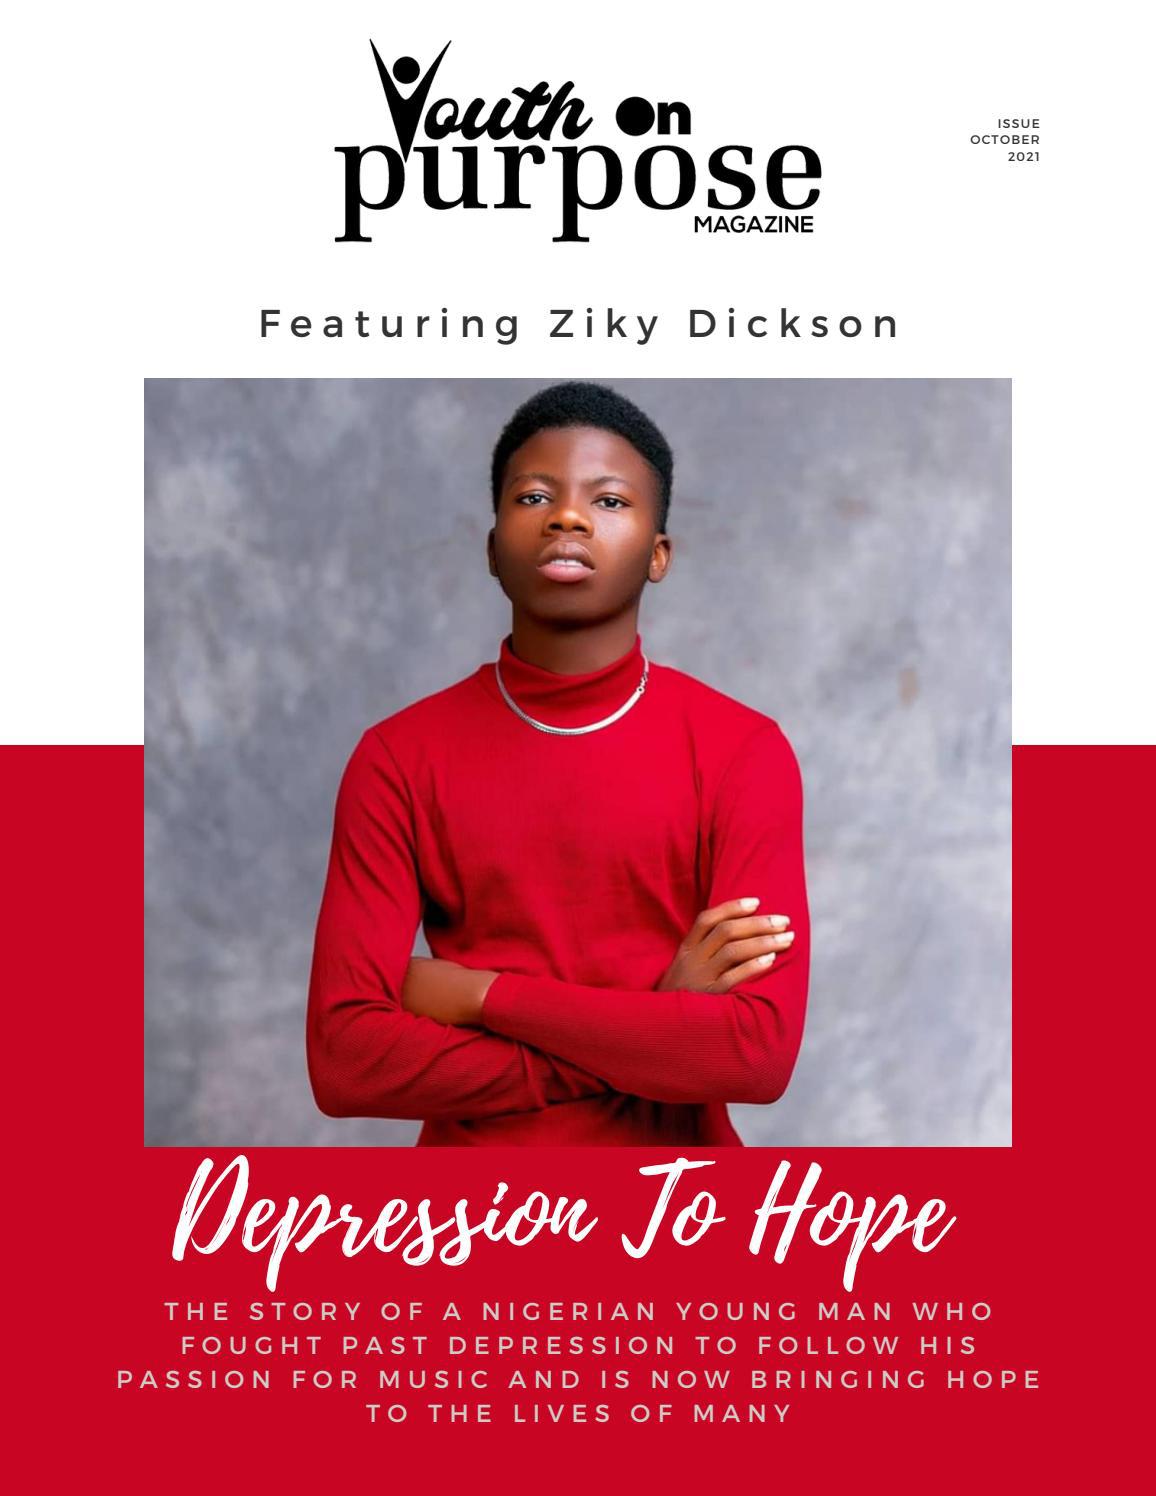 Youth on Purpose Magazine - Issue 2